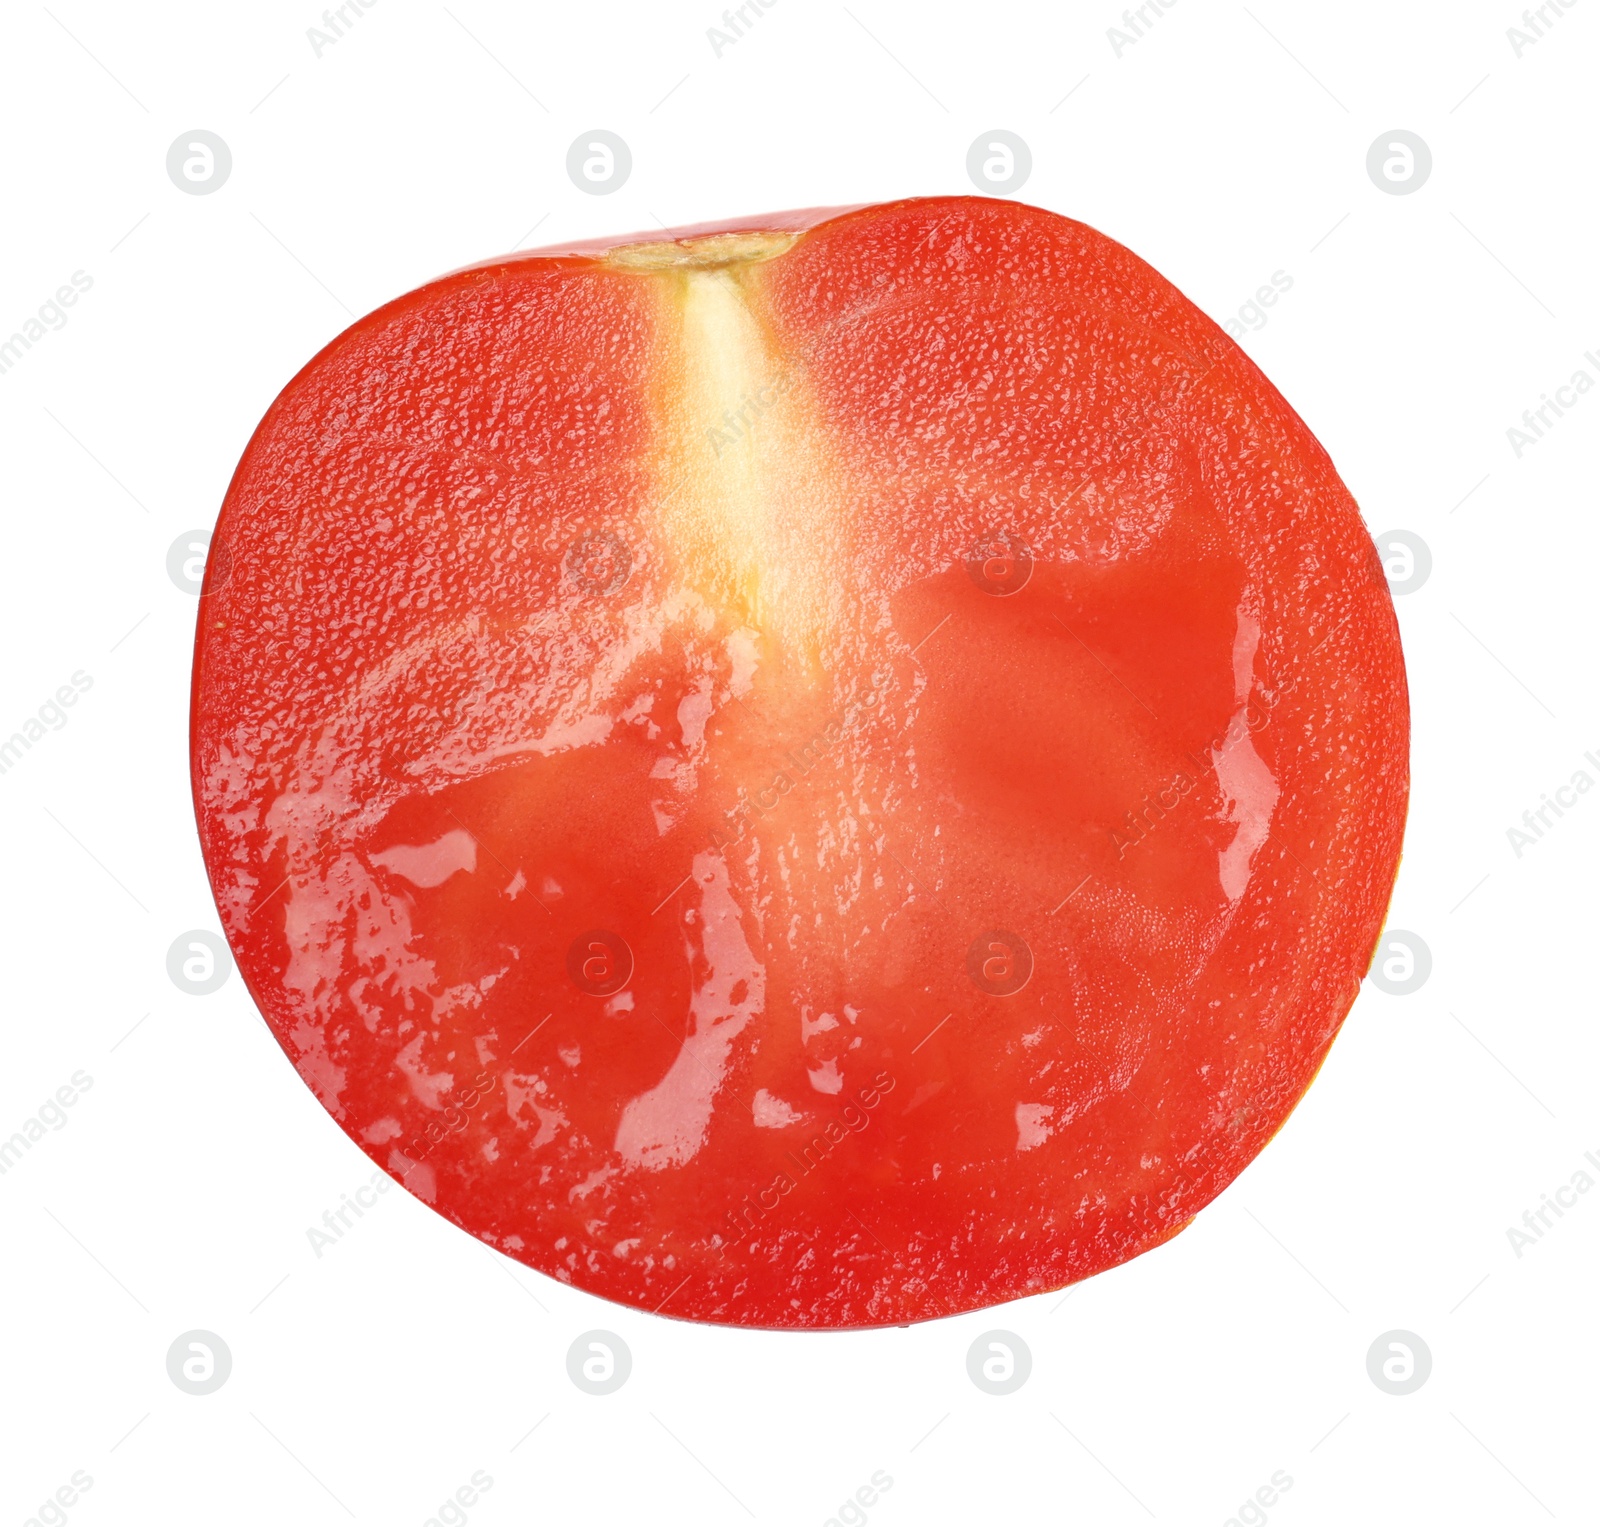 Photo of Half of fresh ripe tomato isolated on white